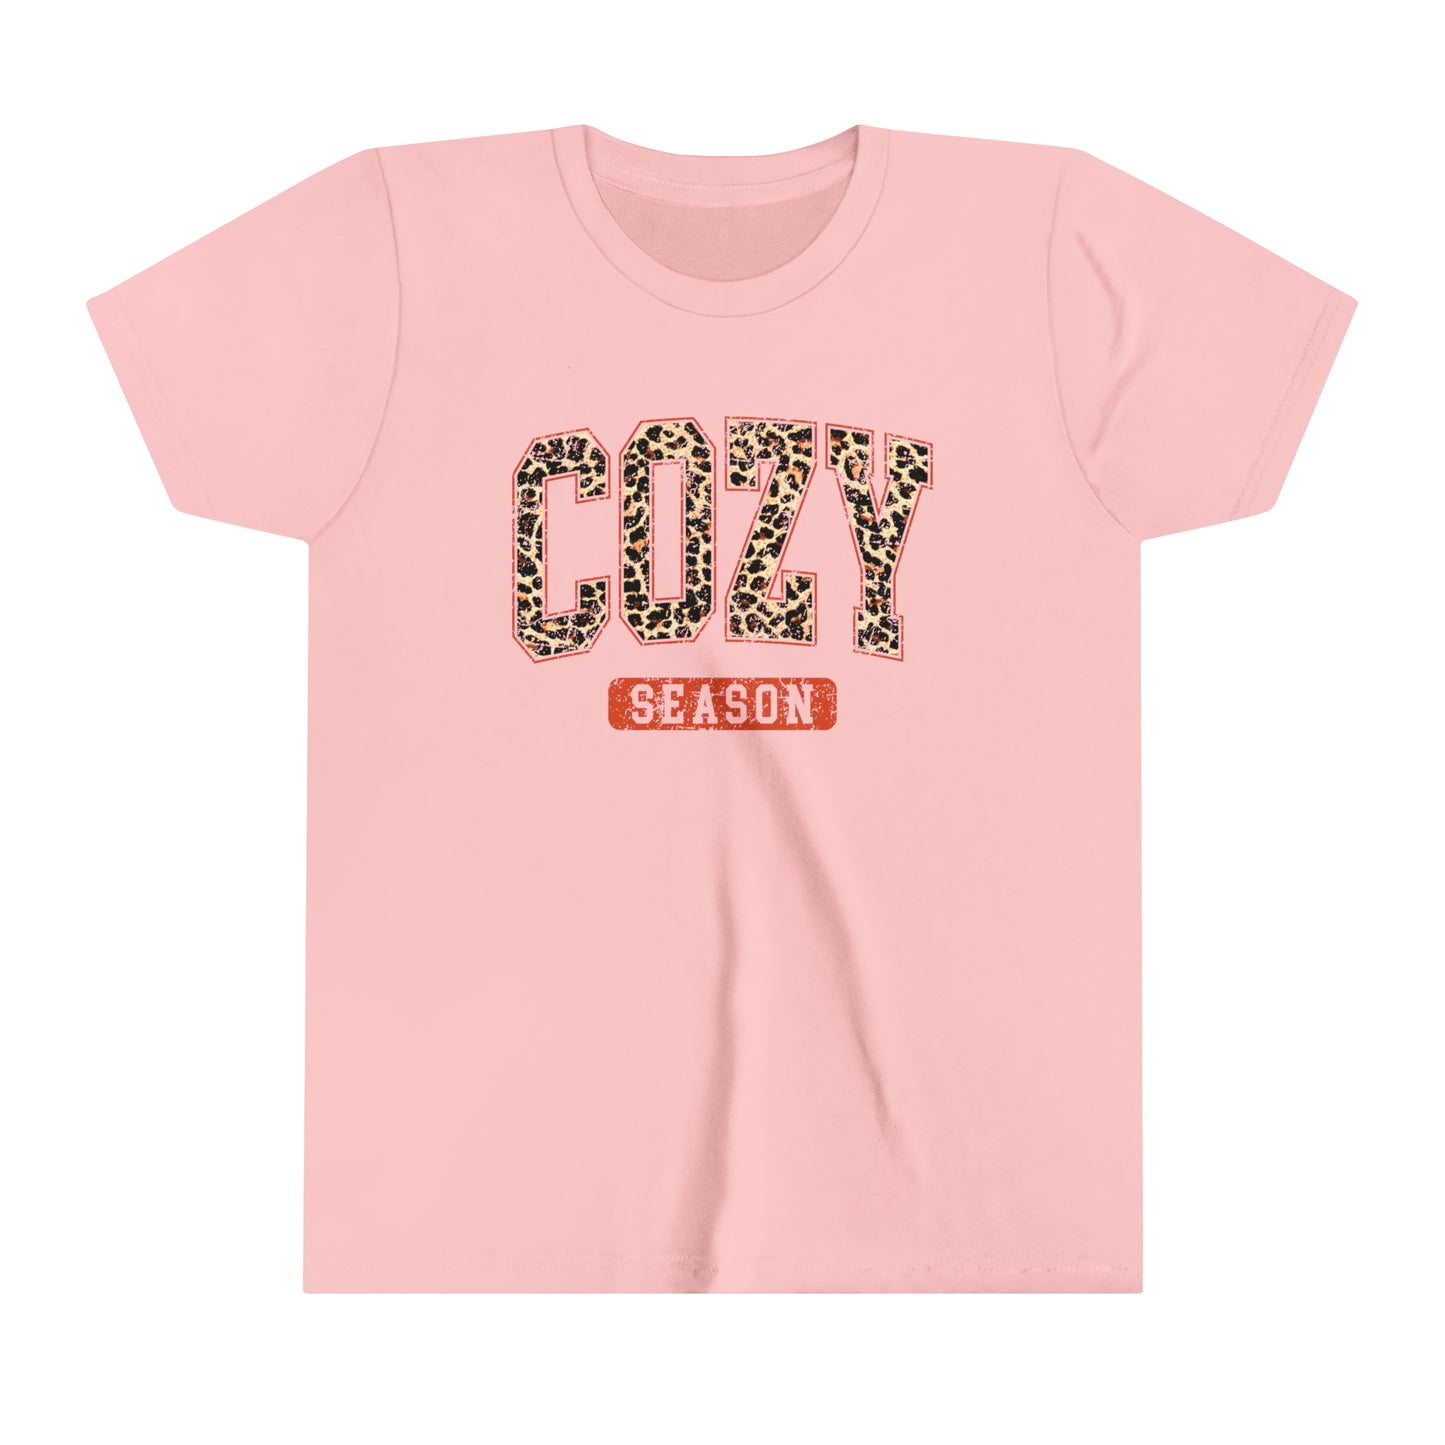 Cozy Season Girl's Youth Short Sleeve Tee